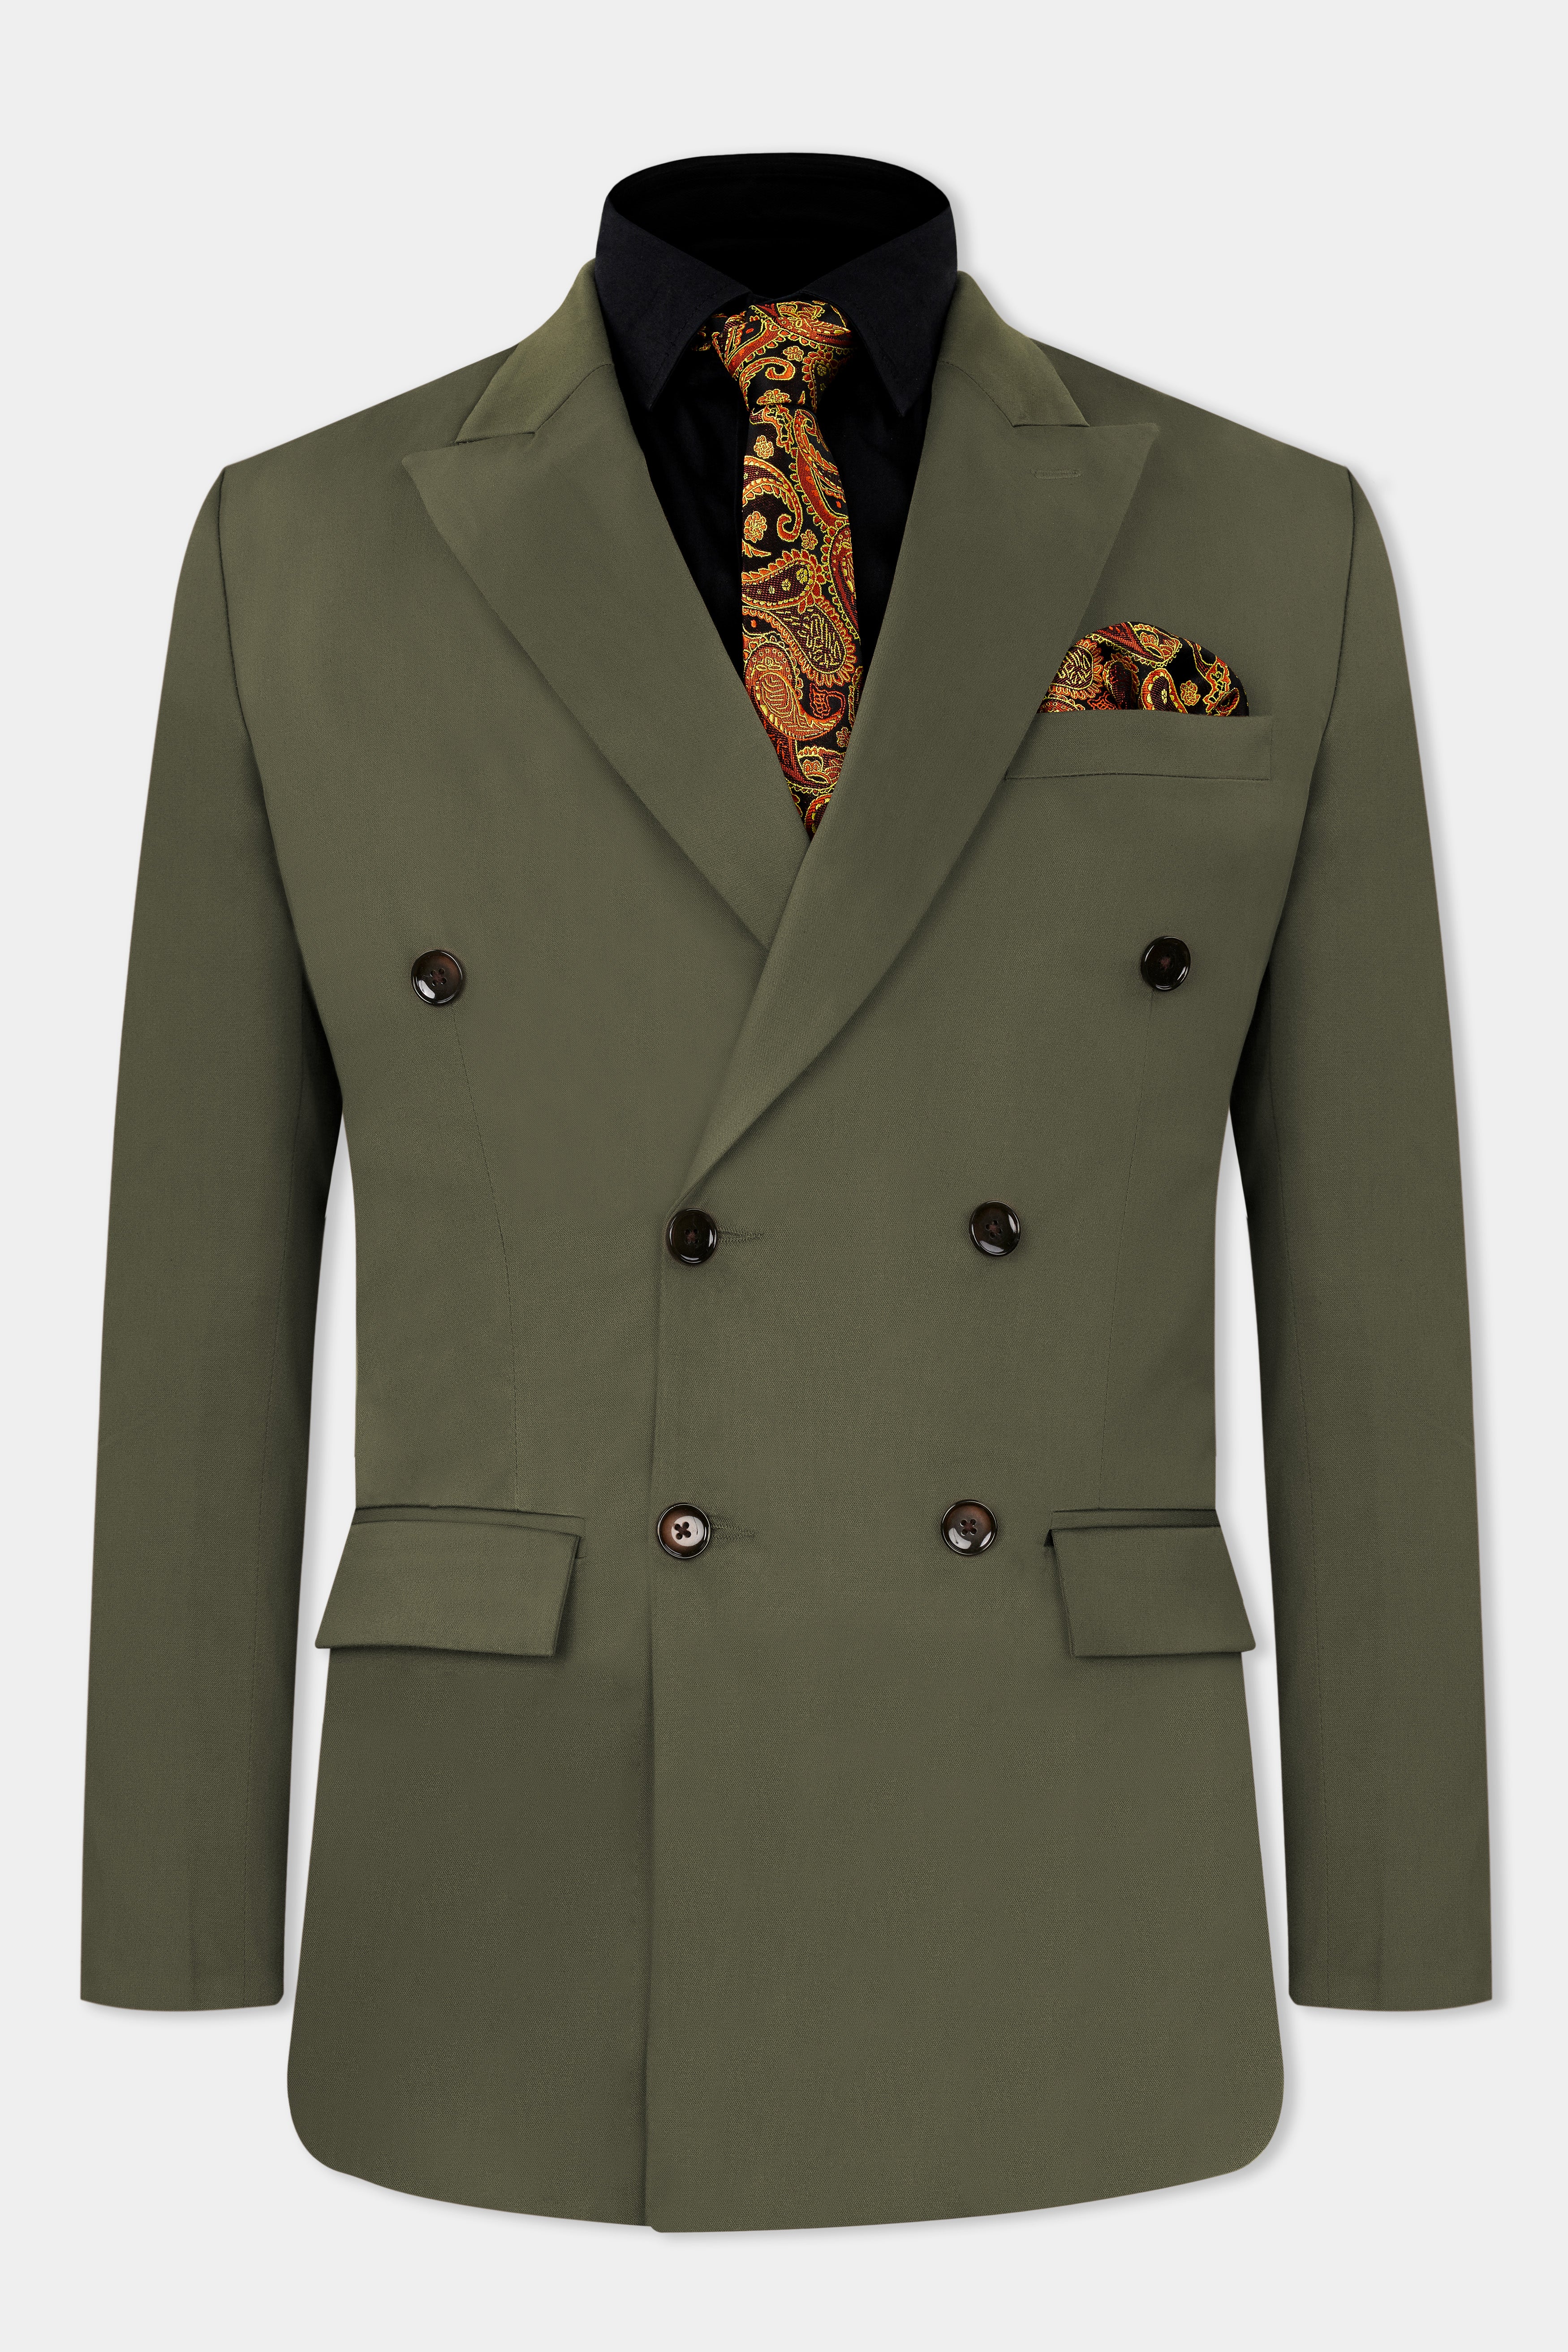 Hemlock Green Plain-Solid Premium Cotton Wedding Waistcoats For Men.